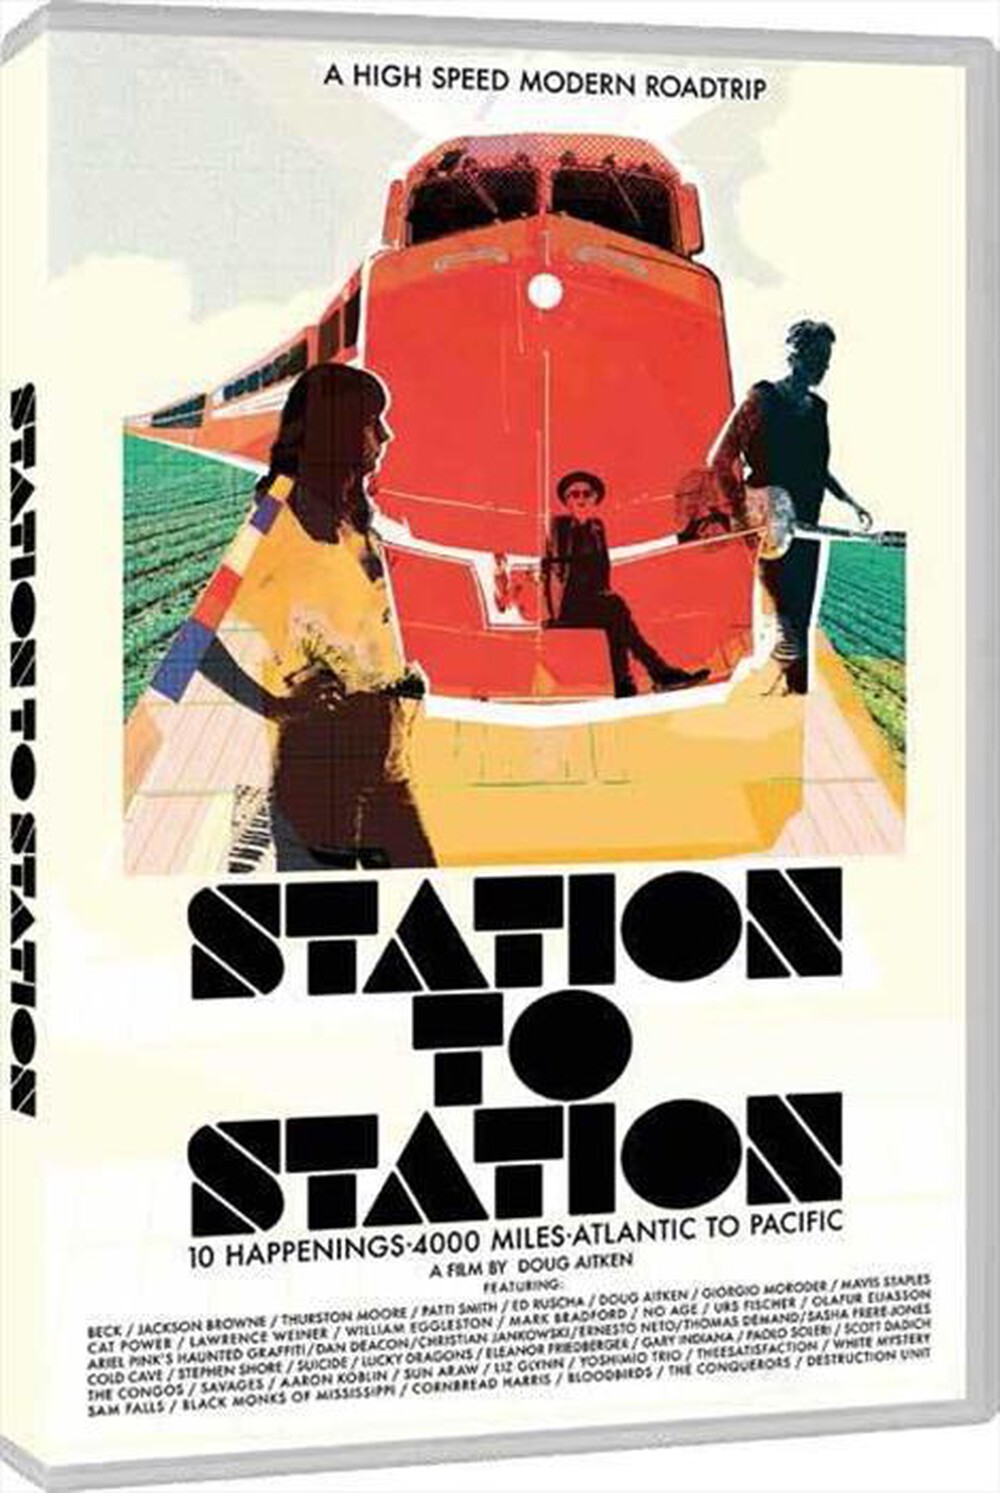 "CECCHI GORI - Station To Station"